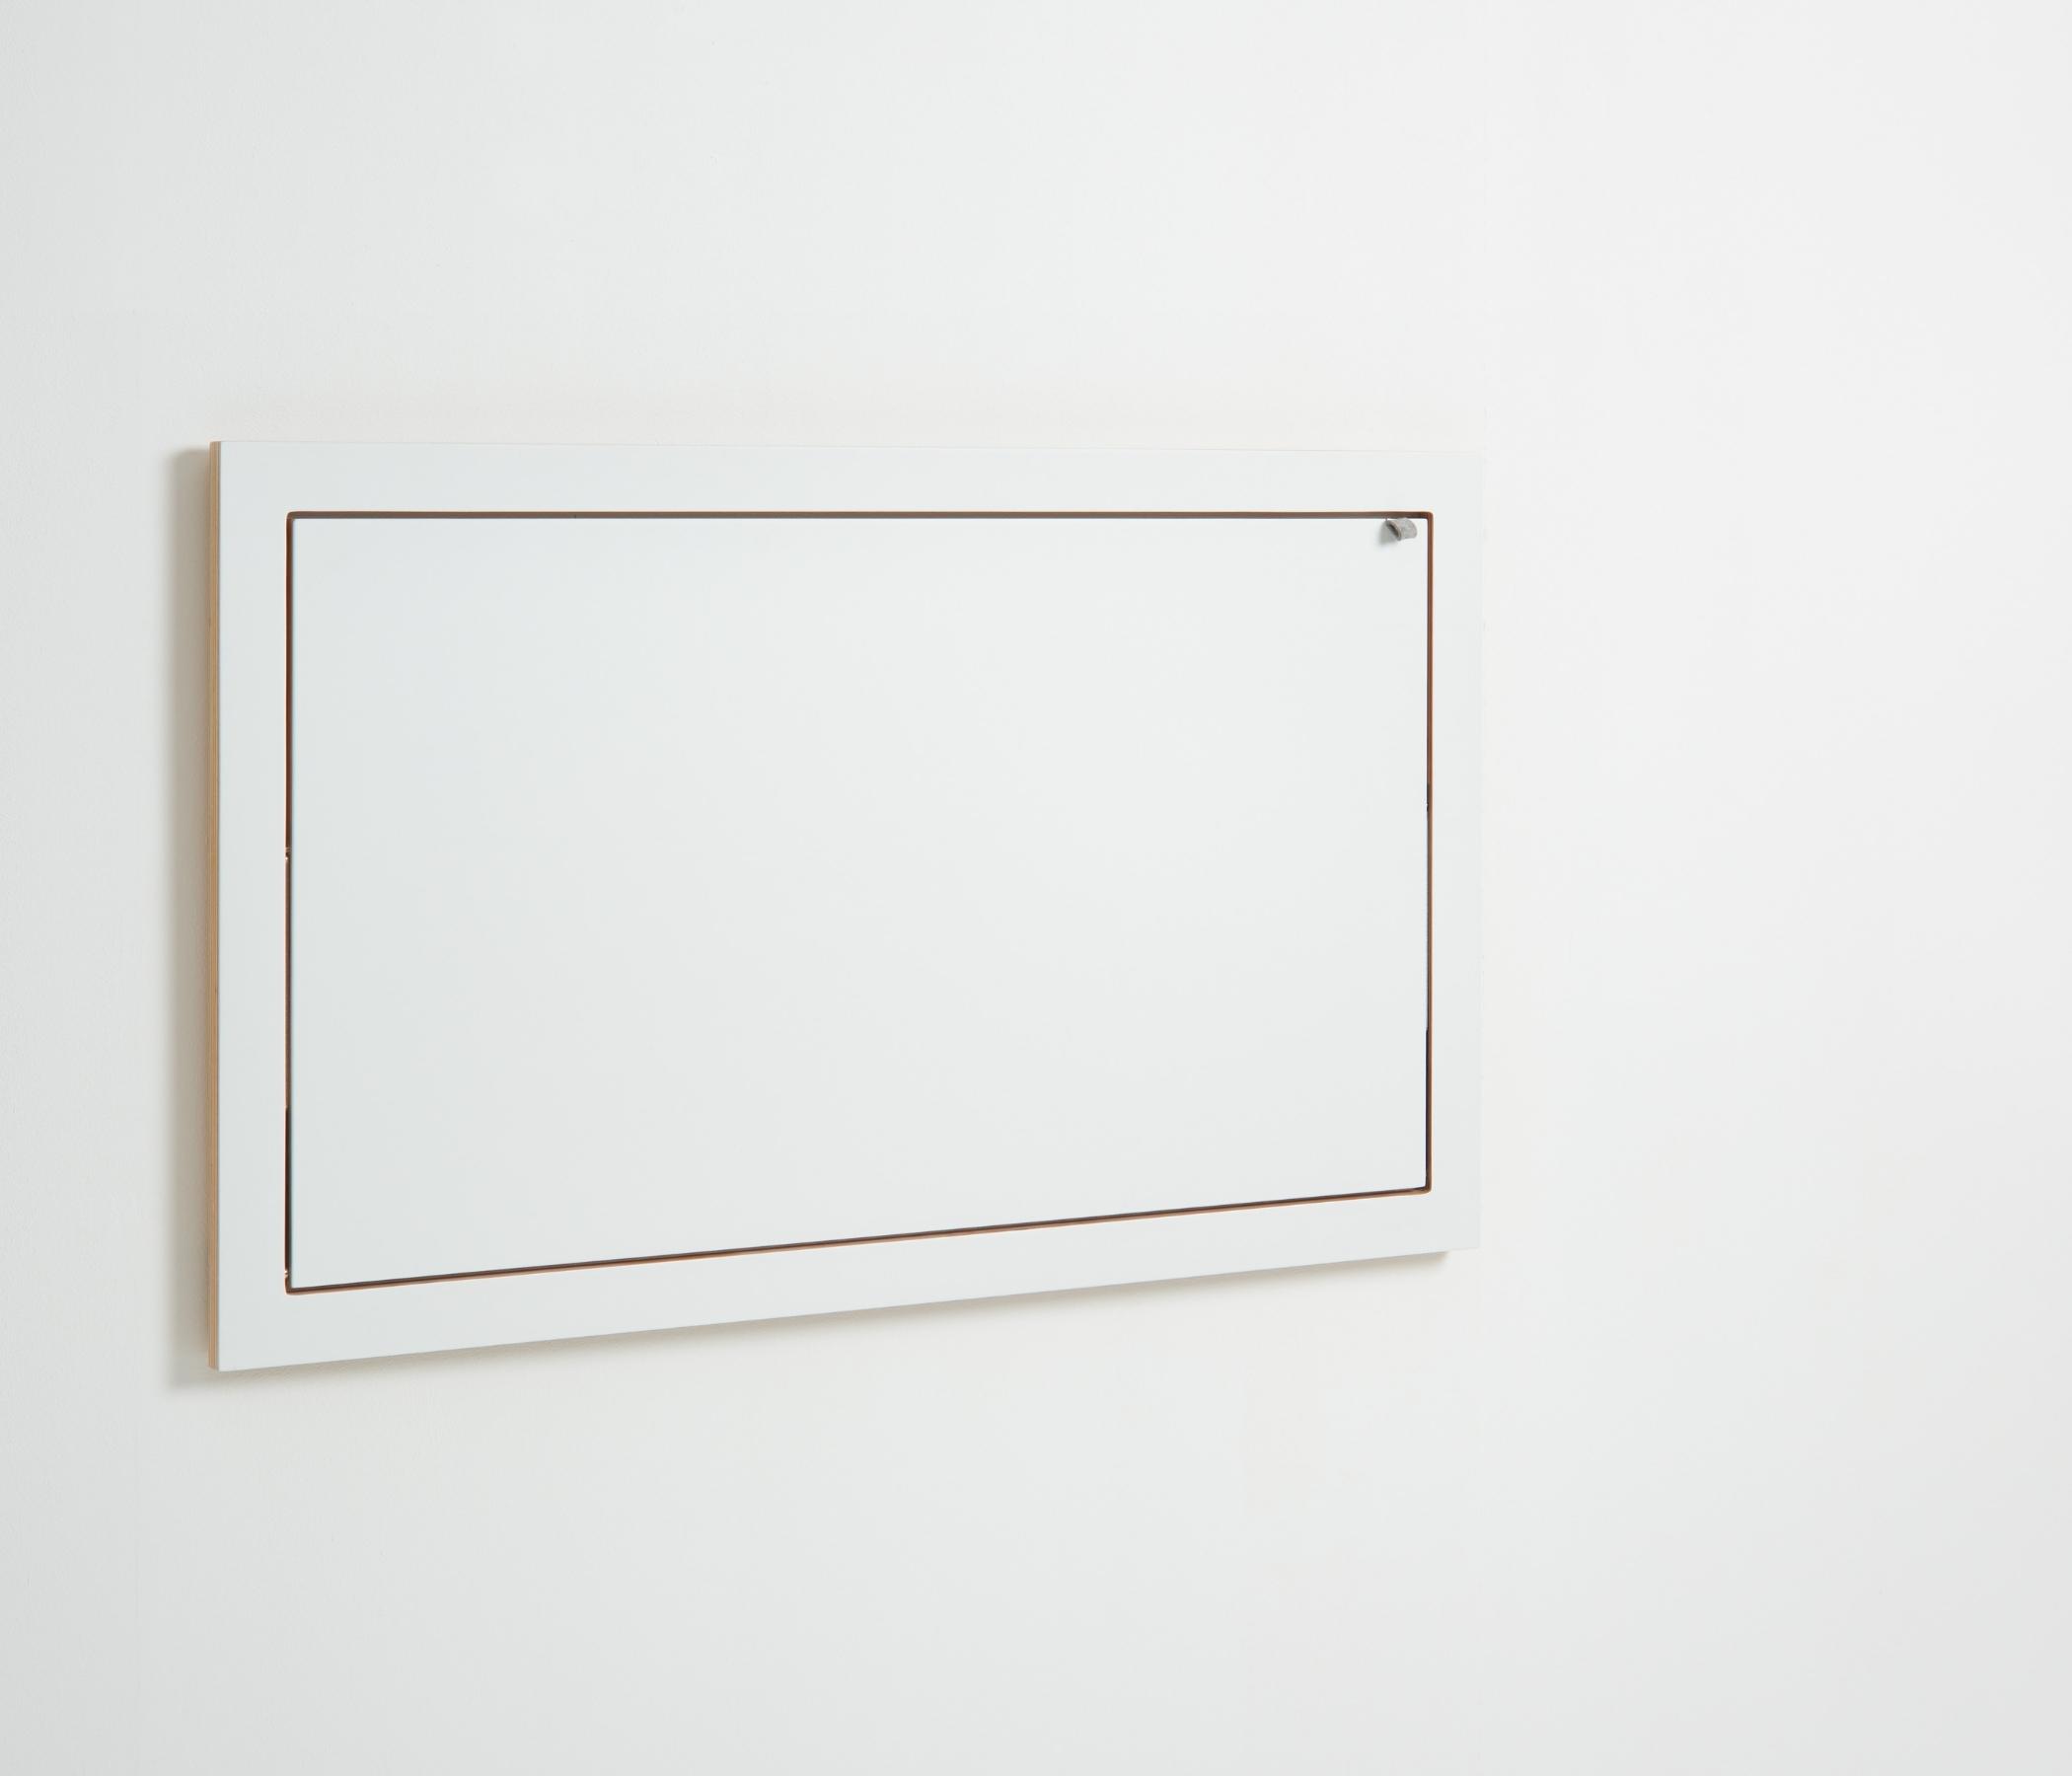 Fläpps Sekretär Holz Weiß 100 x 60 cm